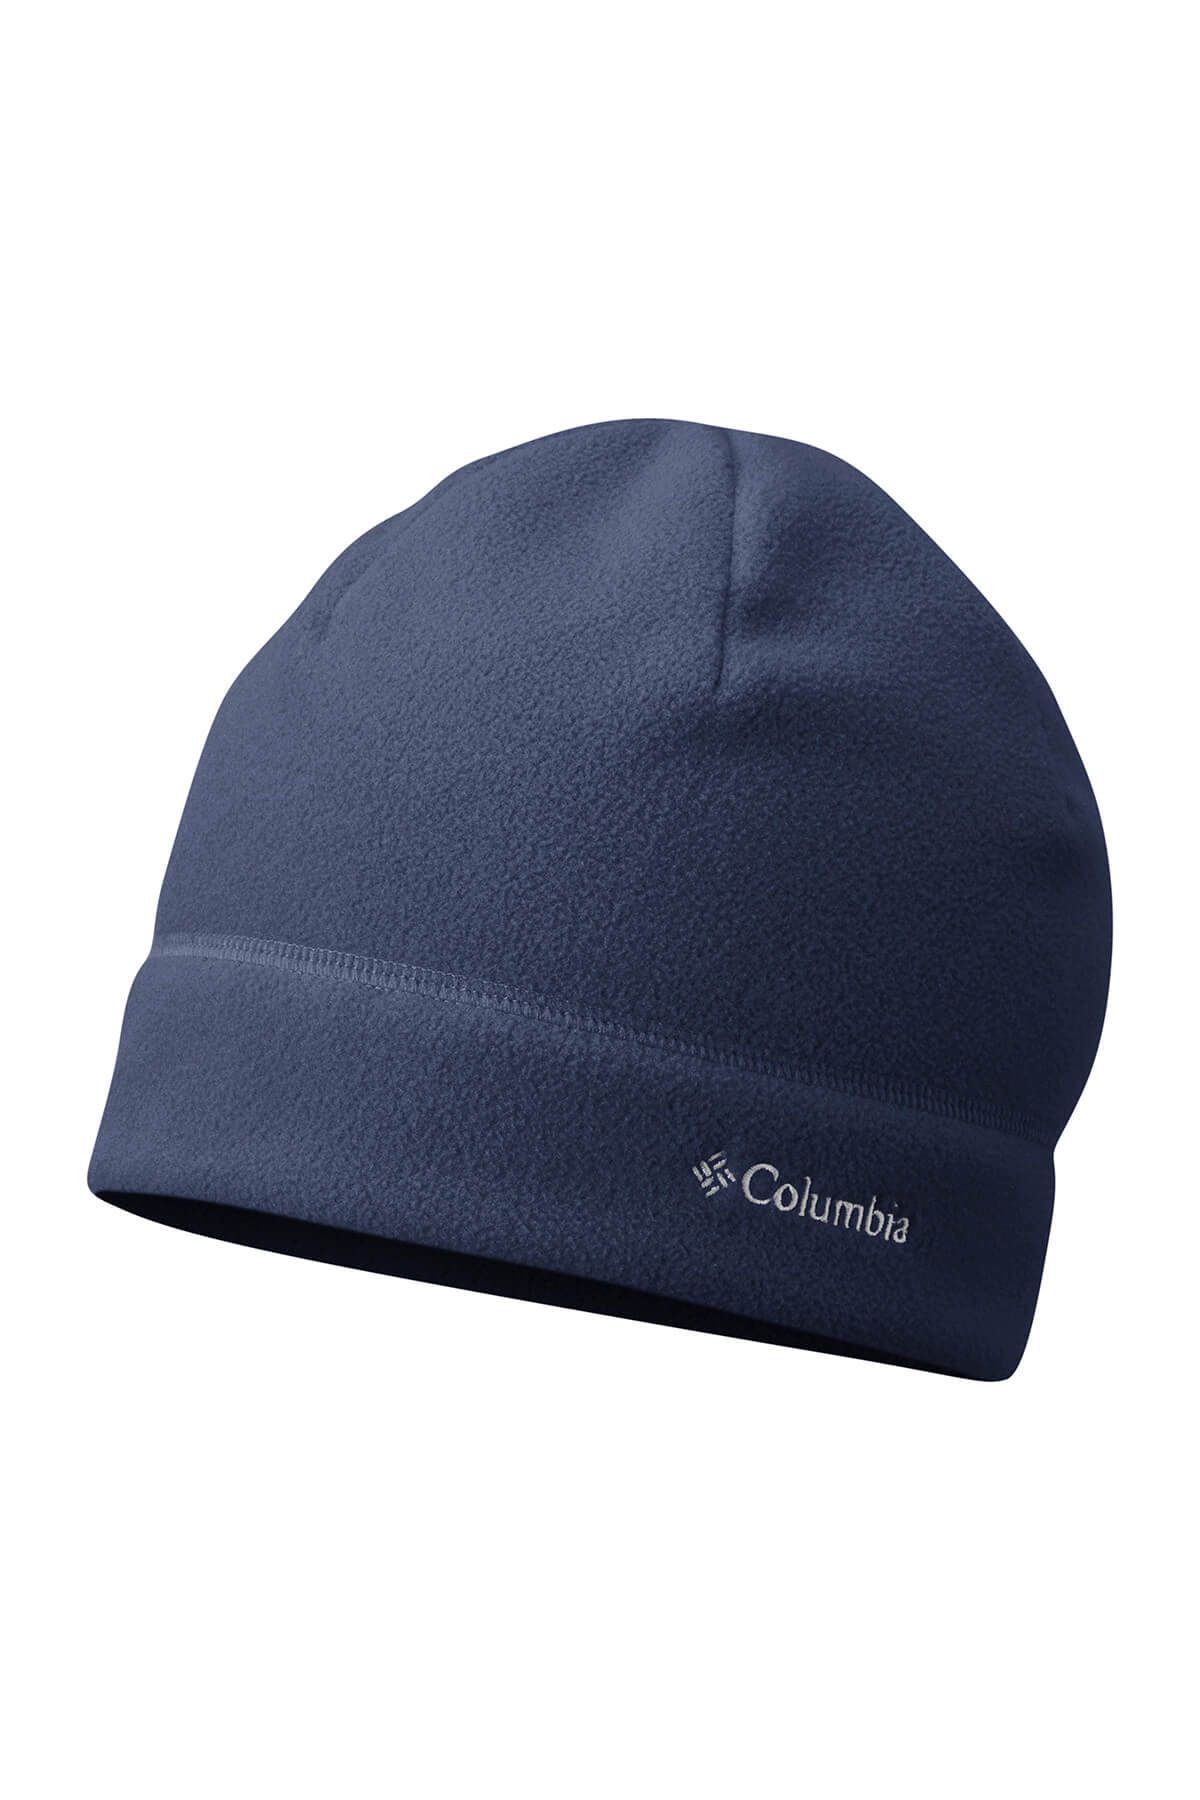 Columbia Unisex Outdoor Şapka 1556791591